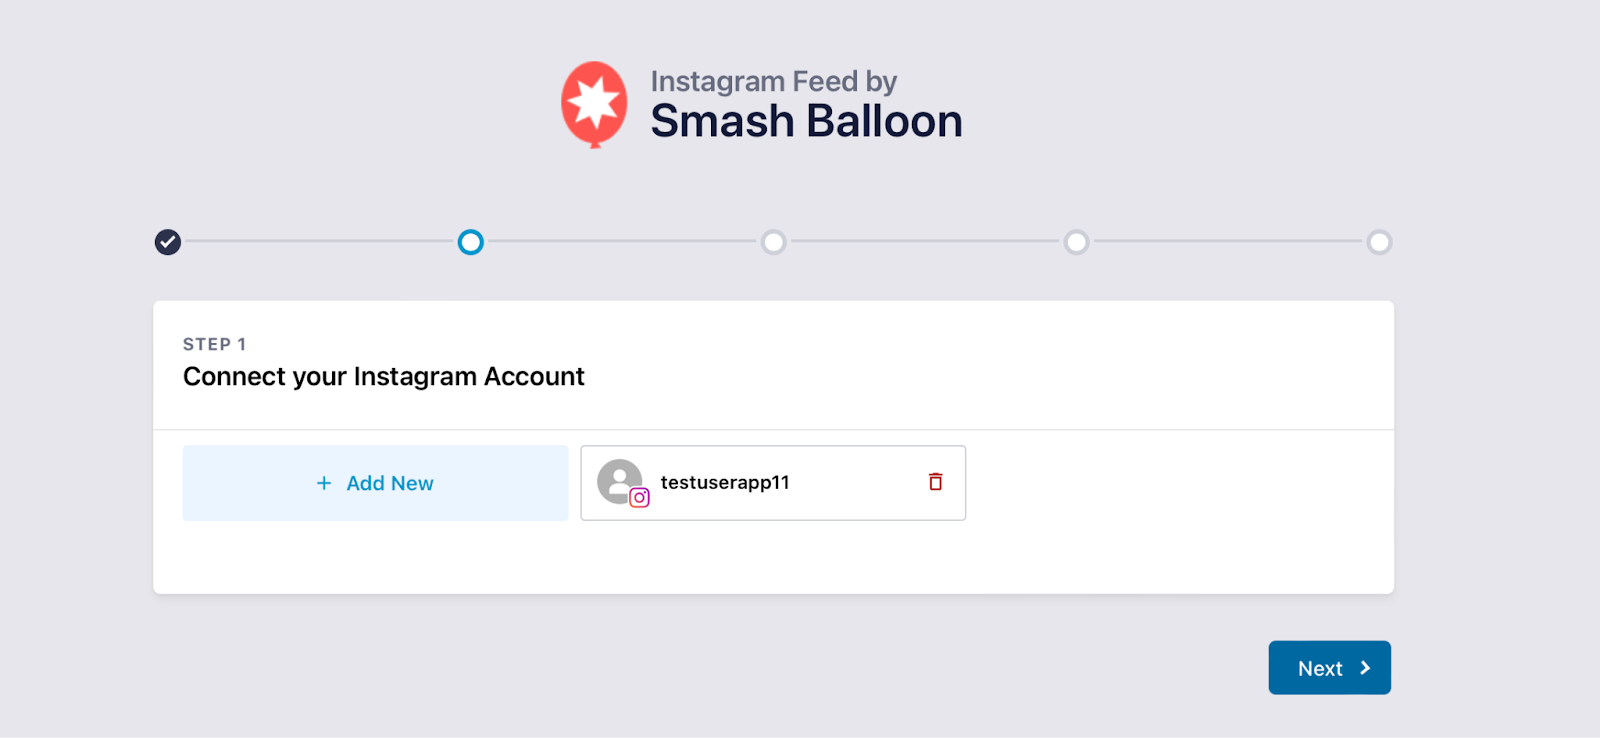 Screenshot of Smash Balloon's Instagra feed setup wizard.